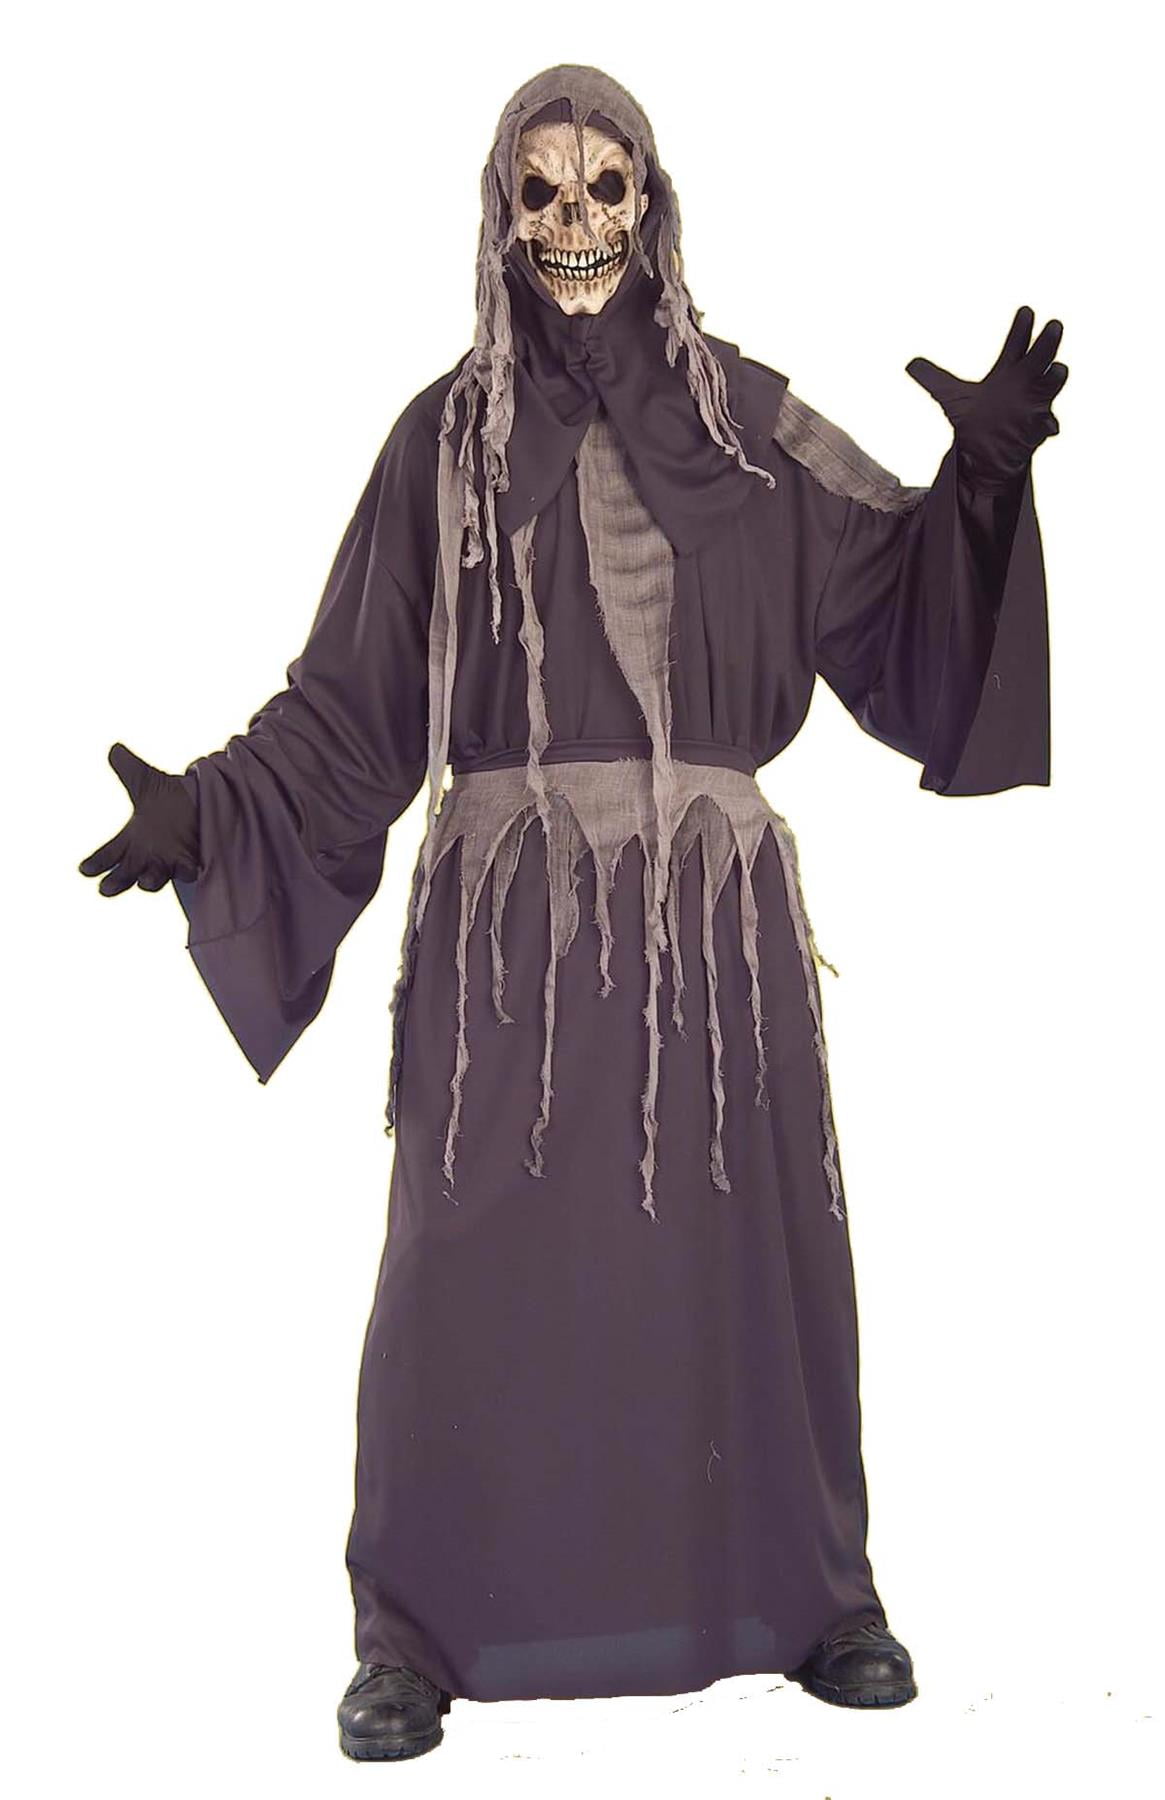 SKELETON REAPER shroud robe boys kids halloween costume - Walmart.com